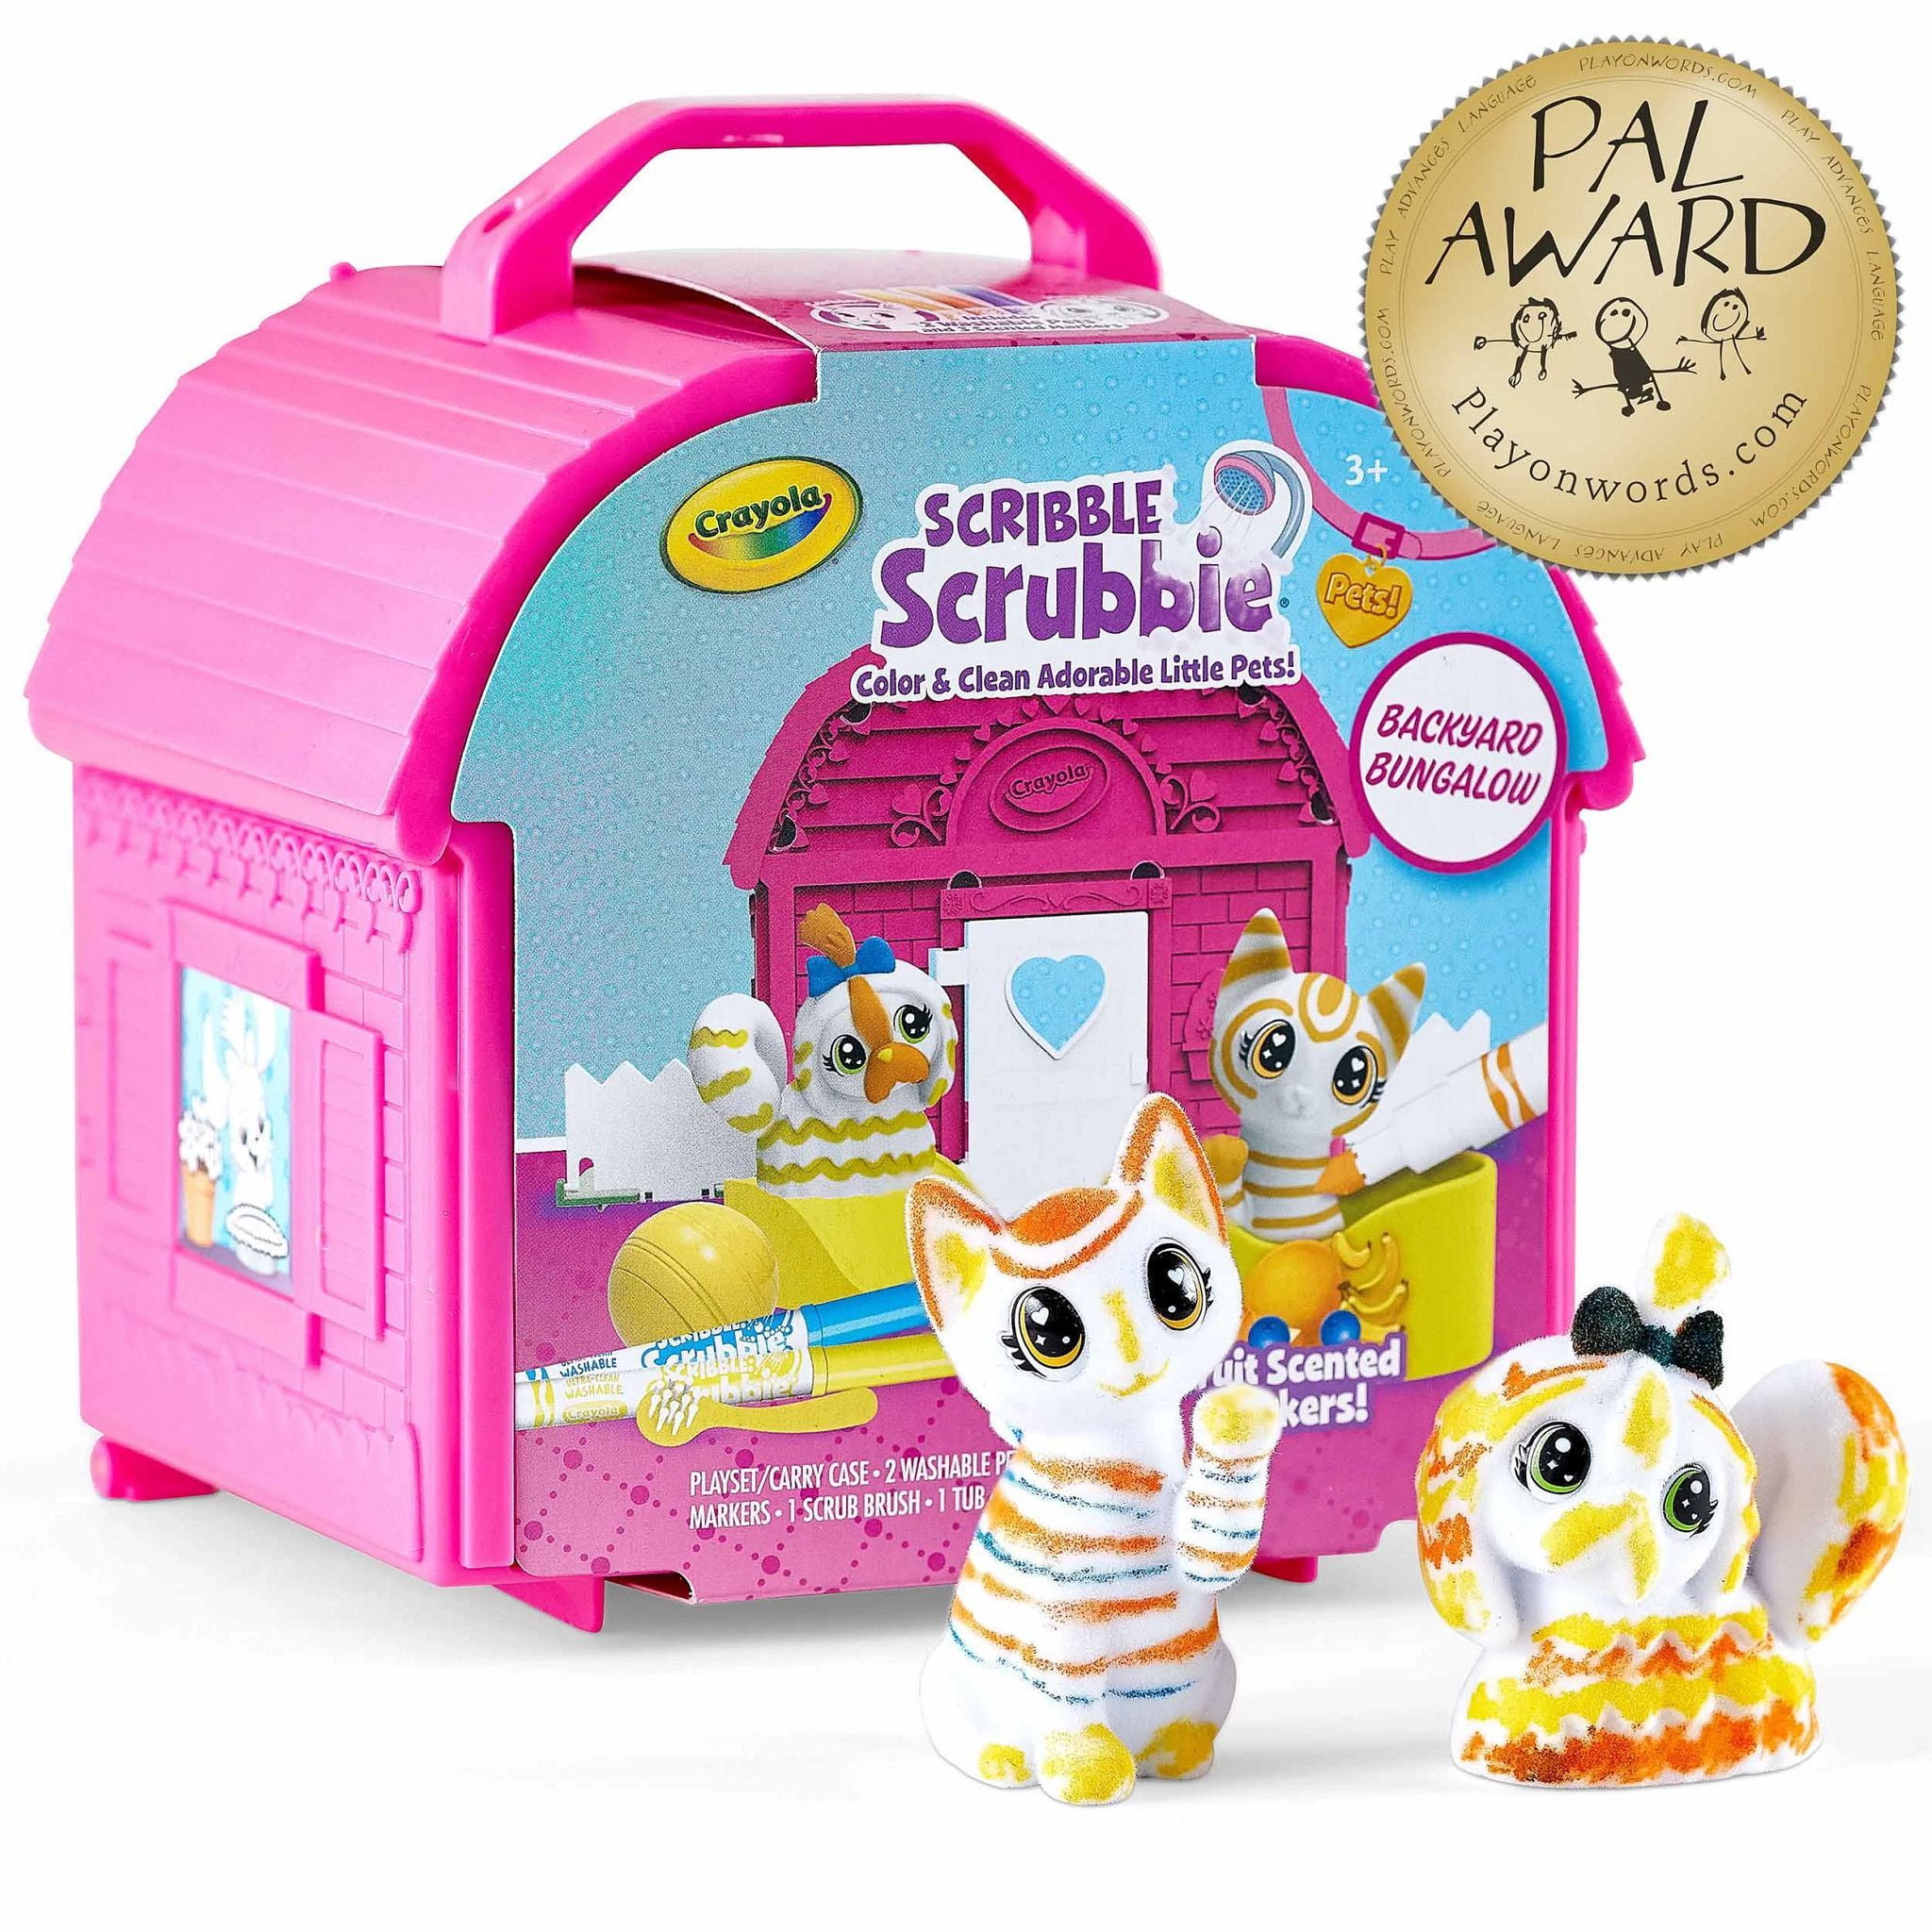 Crayola® Scribble Scrubbie™ Pets! Scrub Tub Set & Backyard Bungalow Set -  BINSCRUBPETKIT1 - TeachersParadise